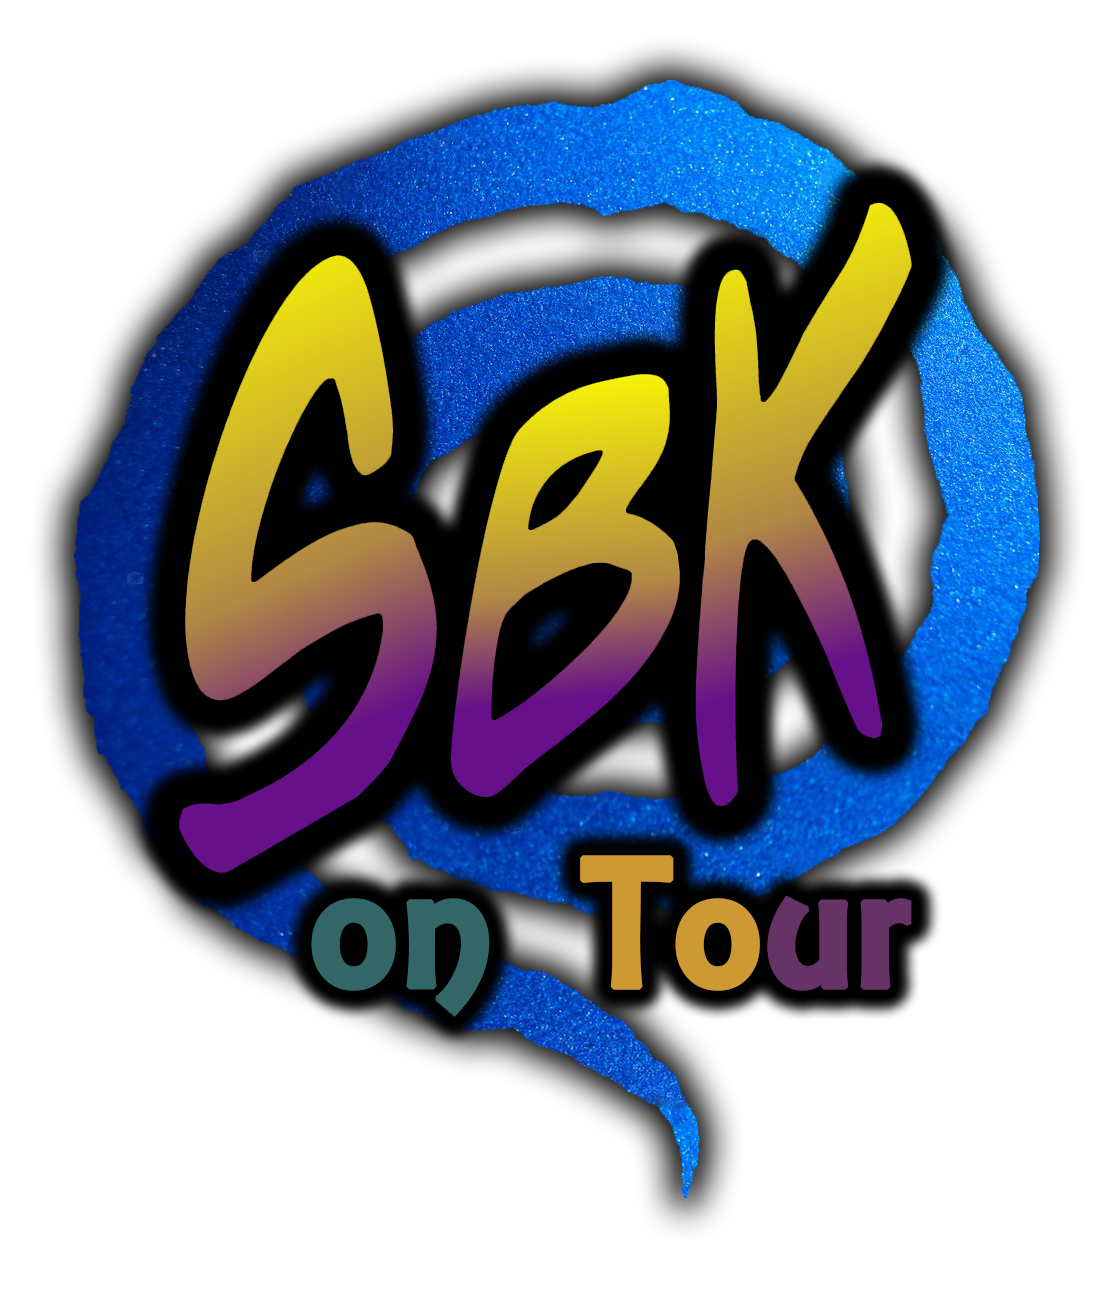 SBK on Tour - YouTube-Kanal aus dem Nürnberger Süden